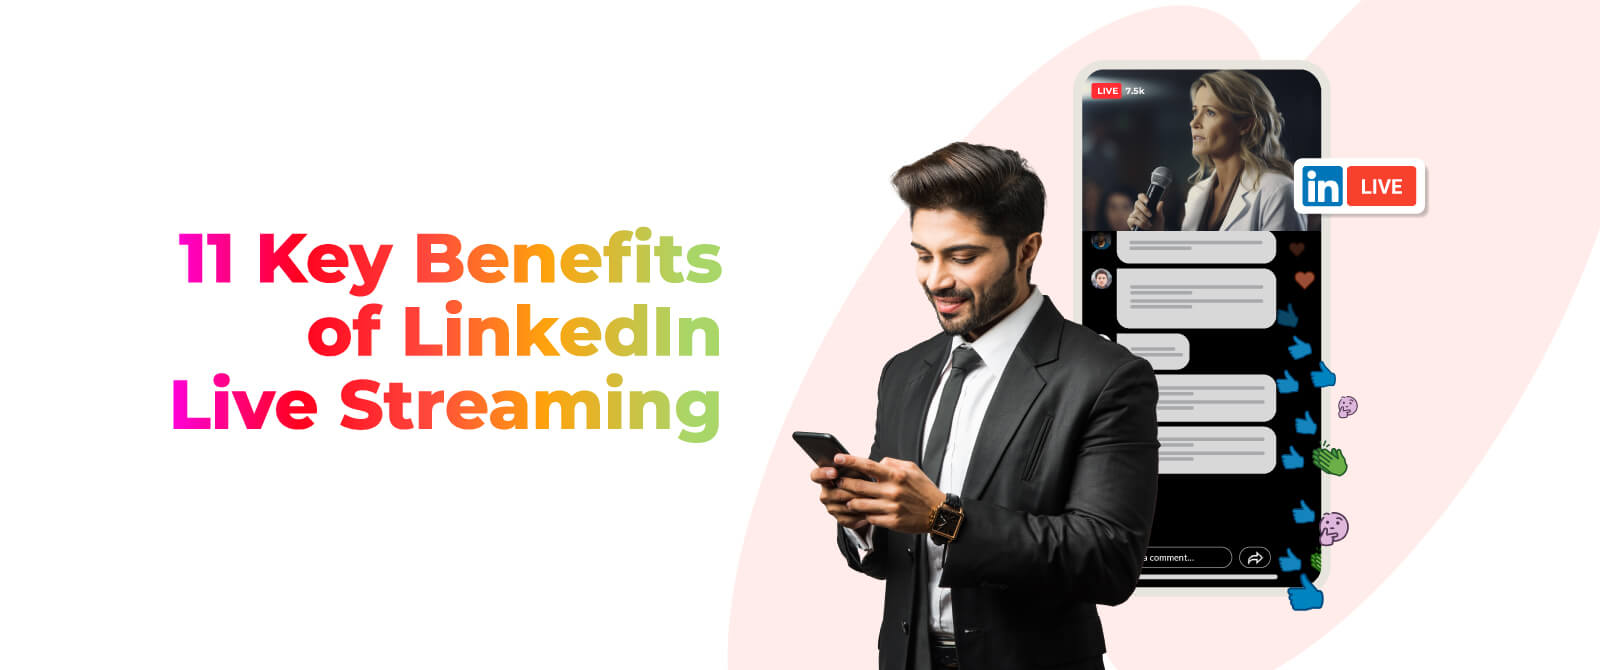 11 Key Benefits of LinkedIn Live Streaming